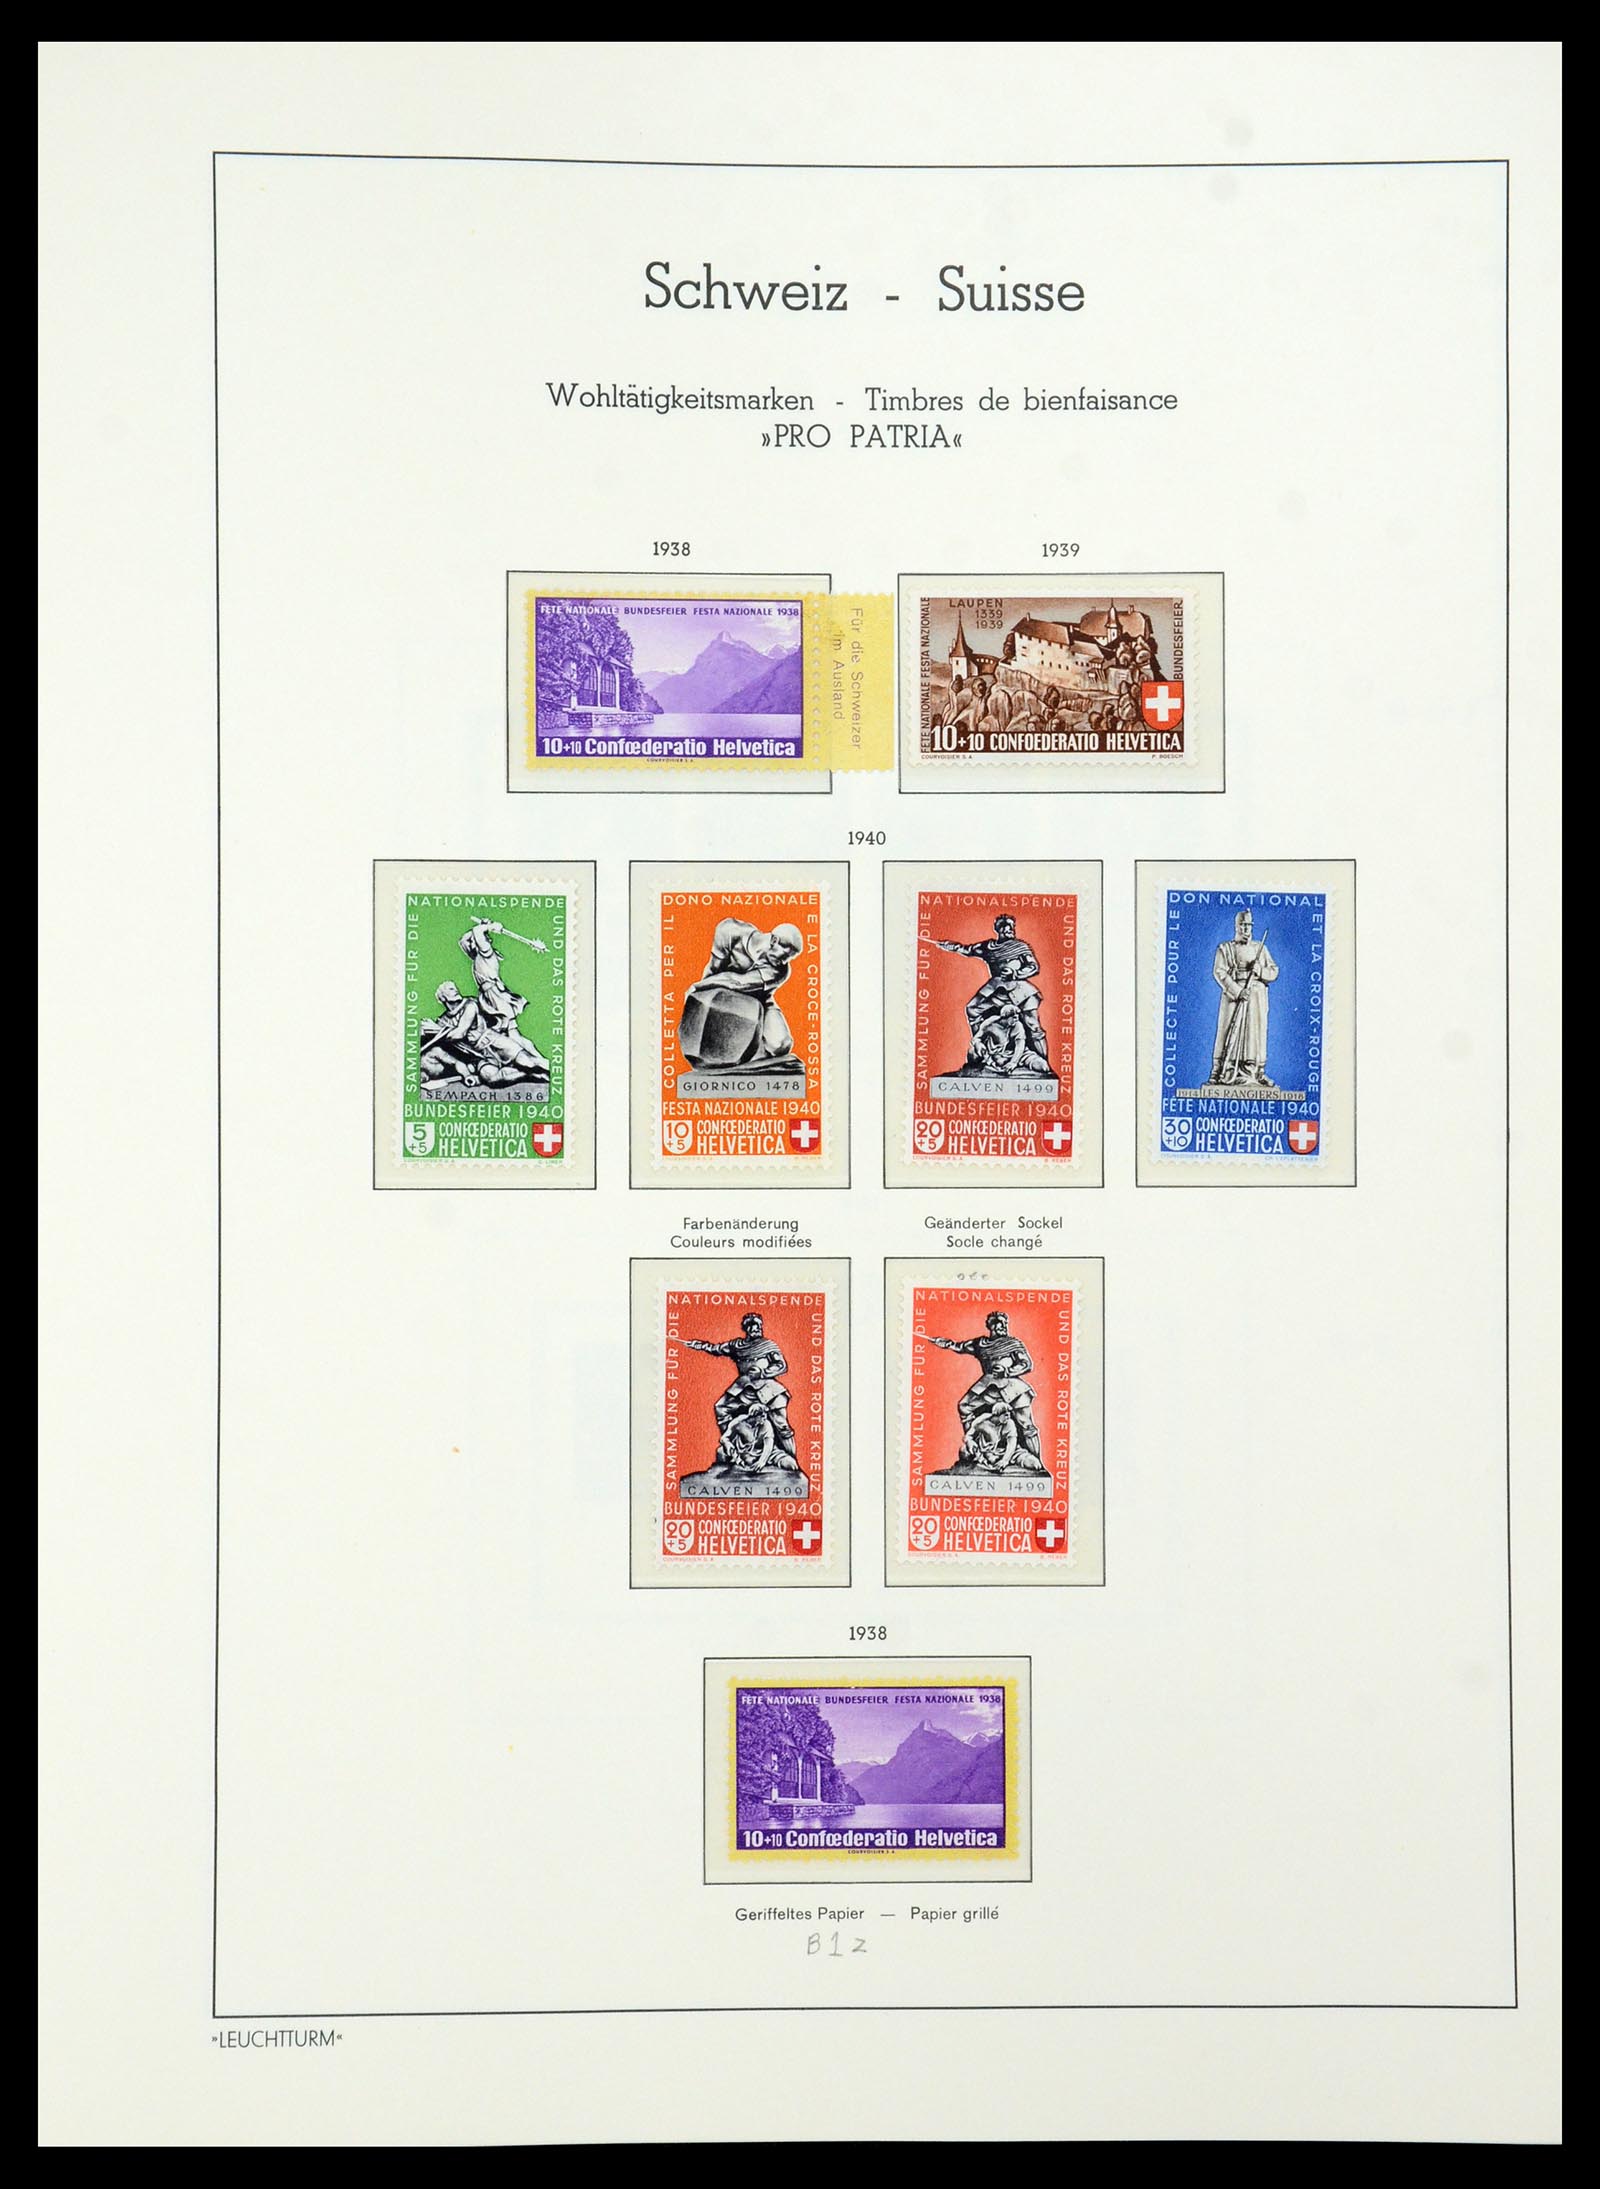 36284 042 - Stamp collection 36284 Switzerland 1854-2006.